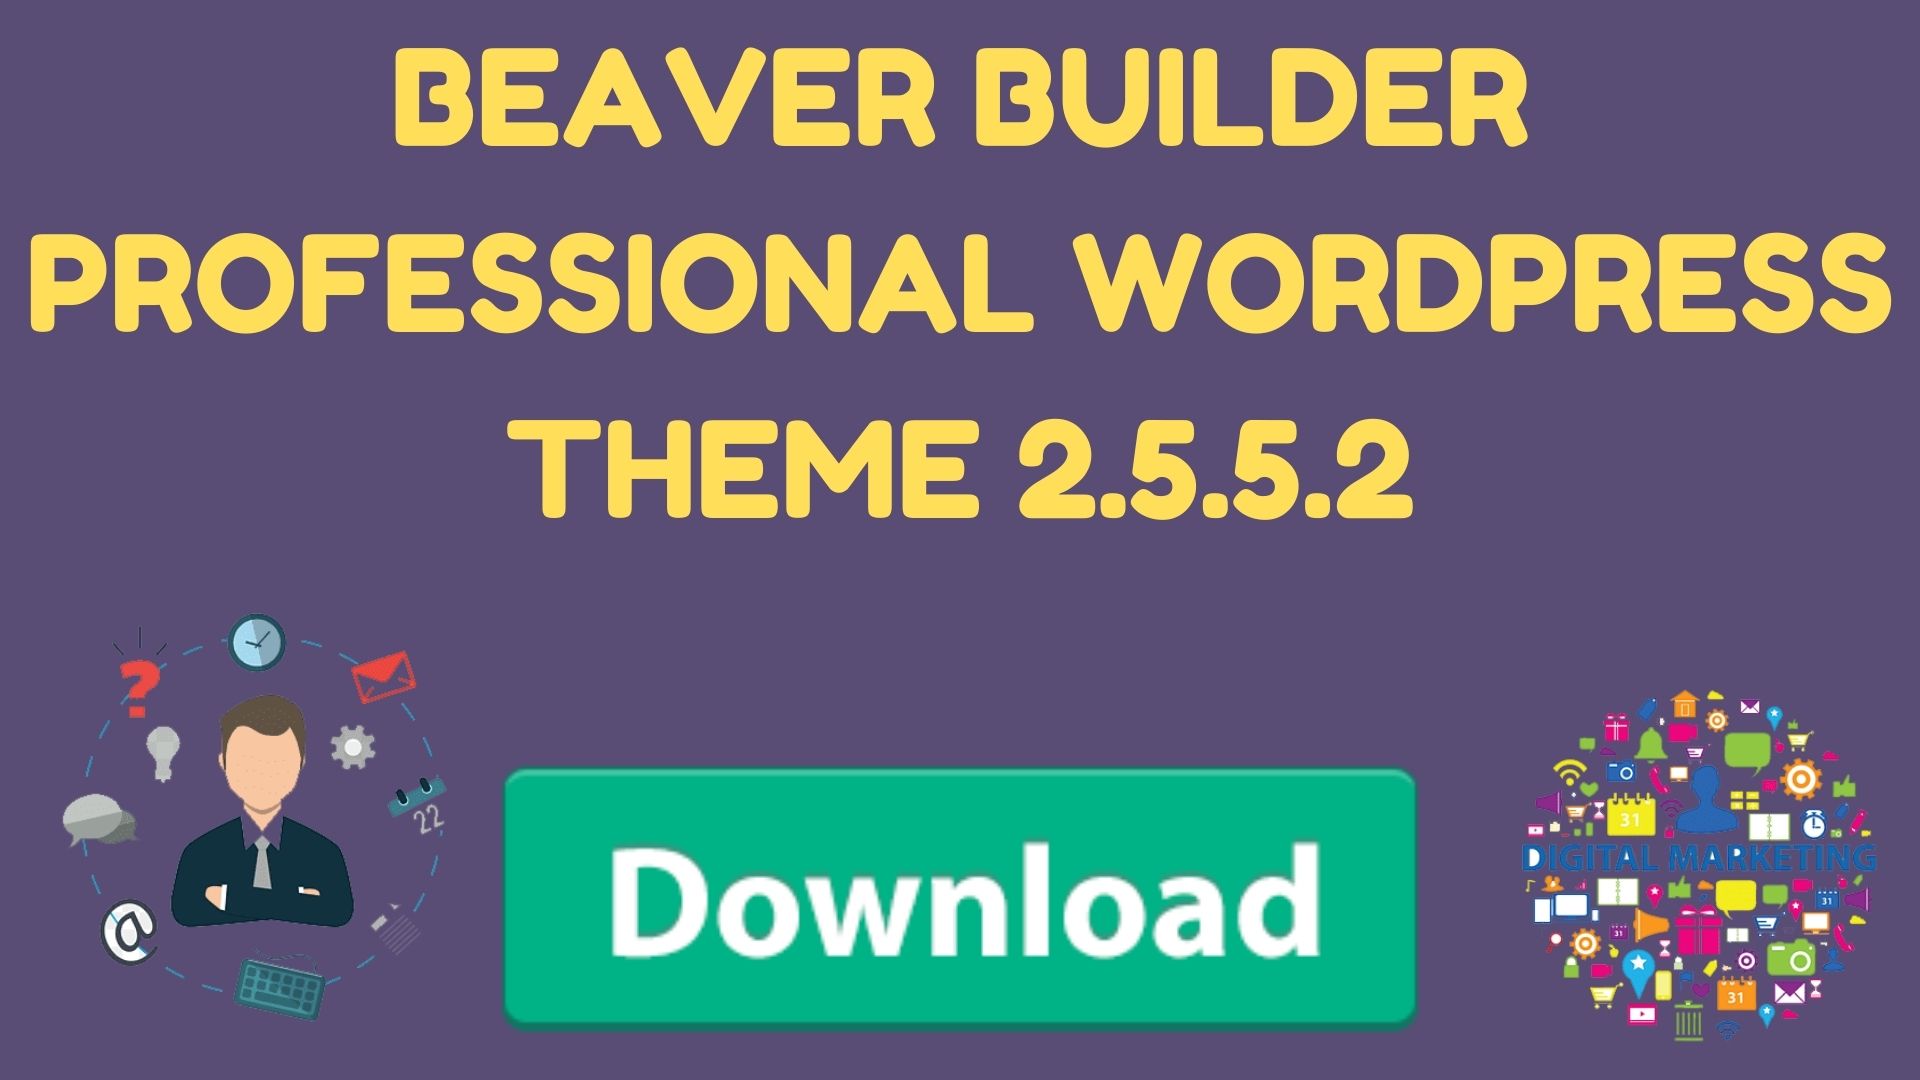 Beaver builder professional wordpress theme 2. 5. 5. 2